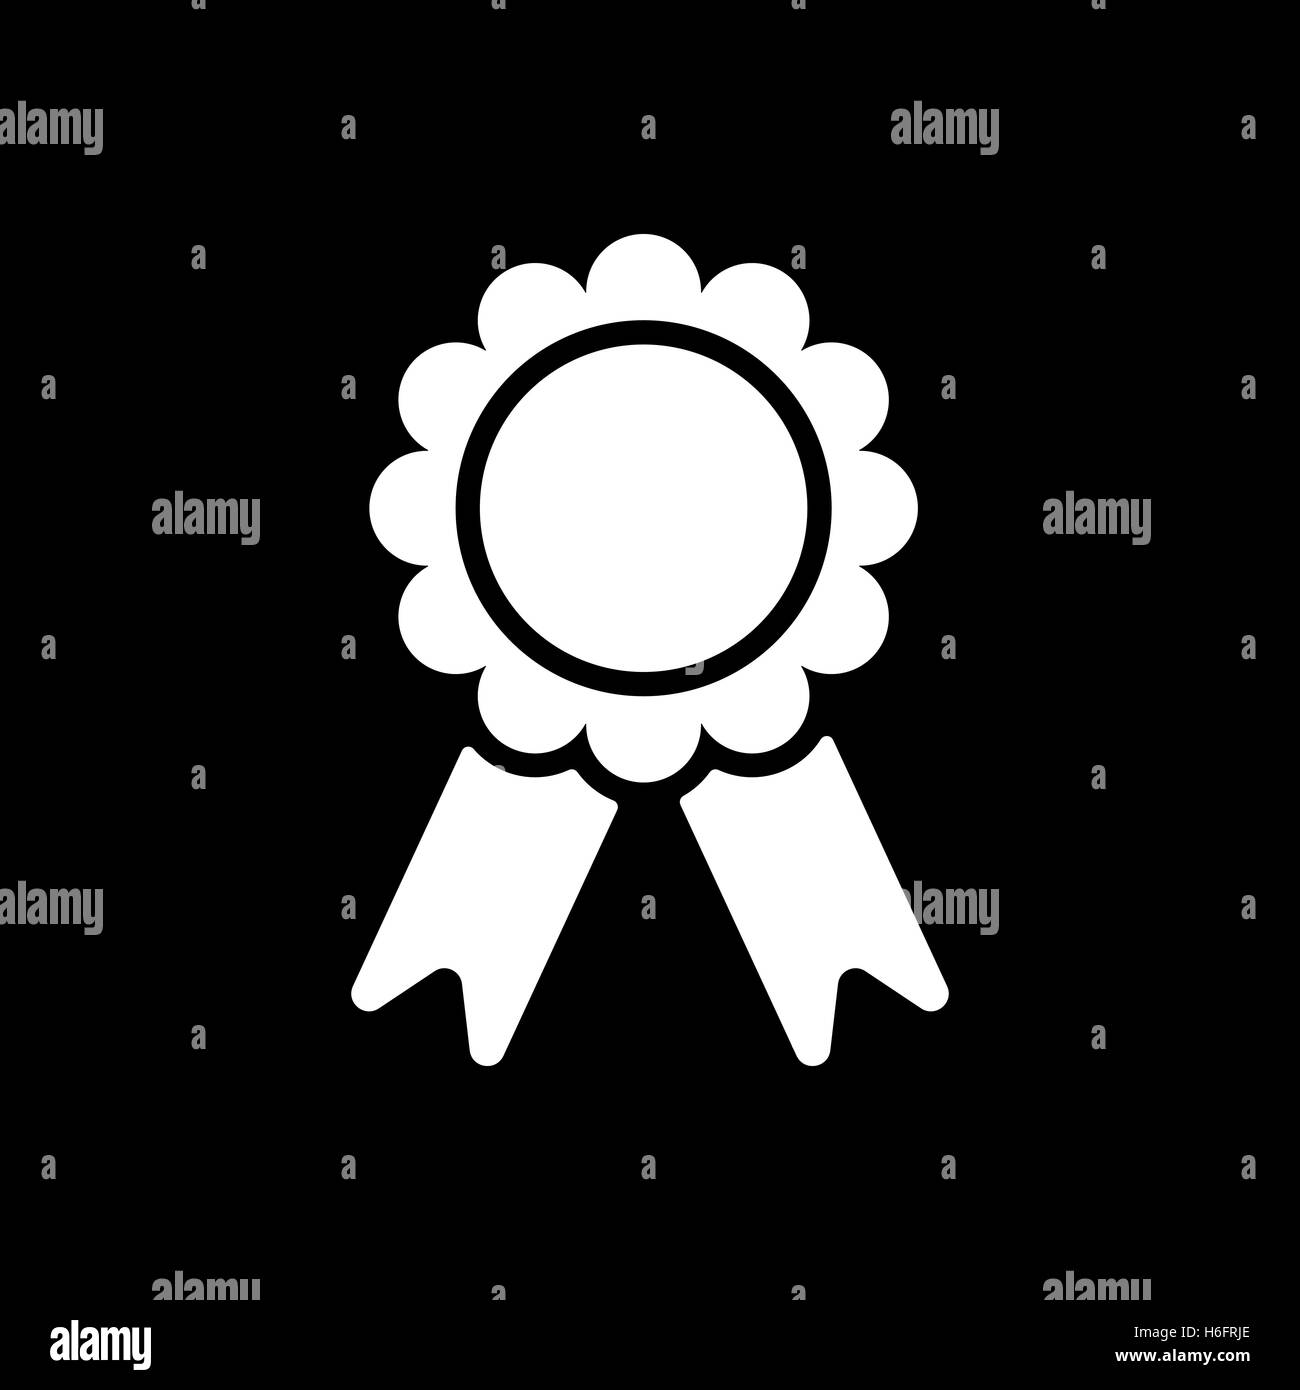 The award icon. Achievement symbol. Flat Vector illustration Stock Vector